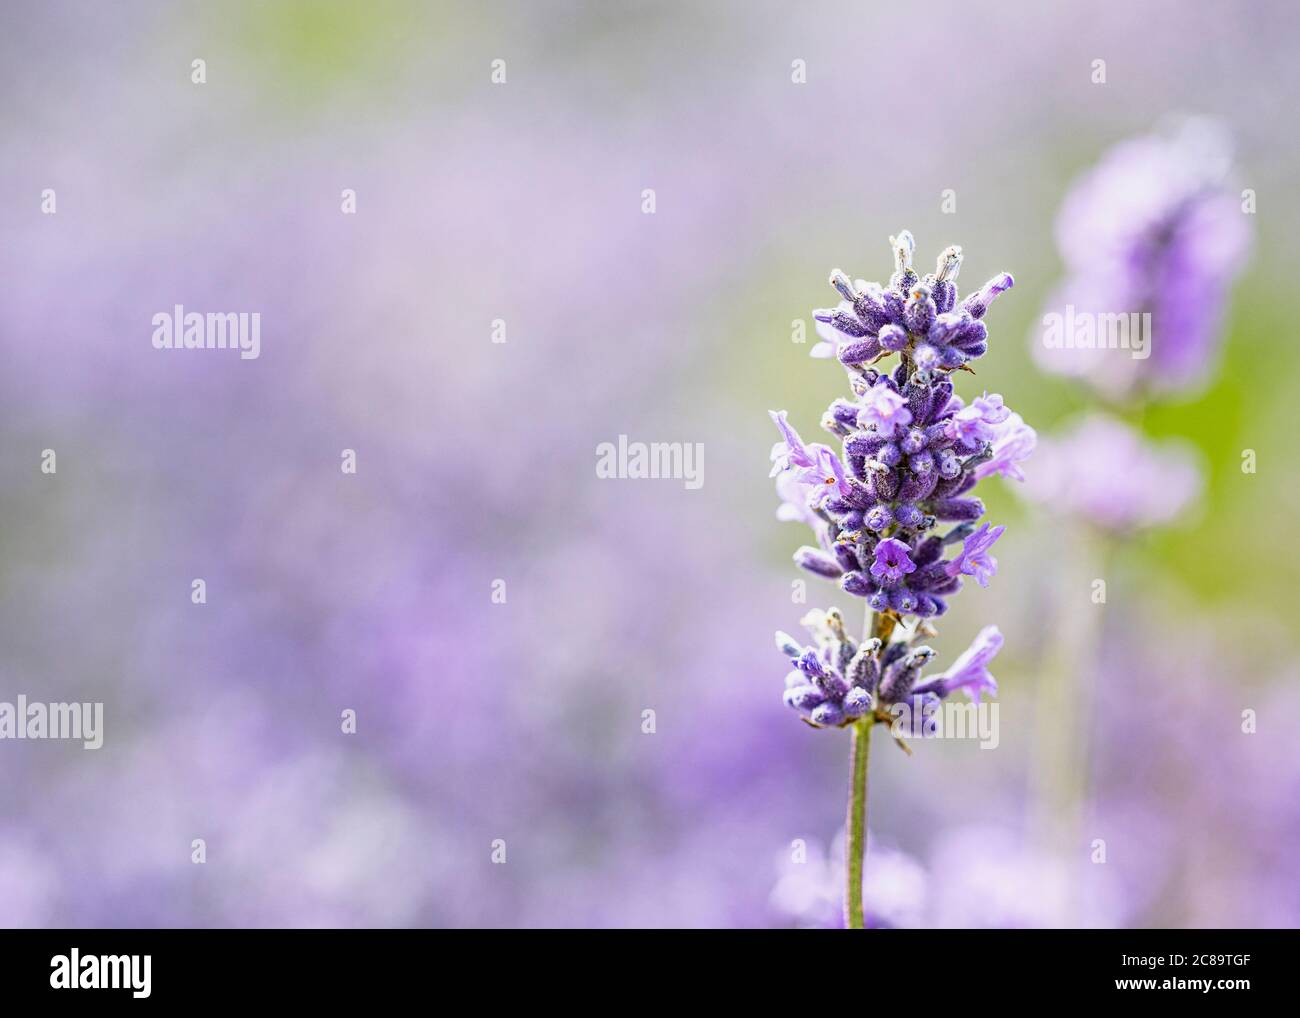 Lavender, Lavandula, Close-up detail of mauve coloured flower growing outdoor. Stock Photo